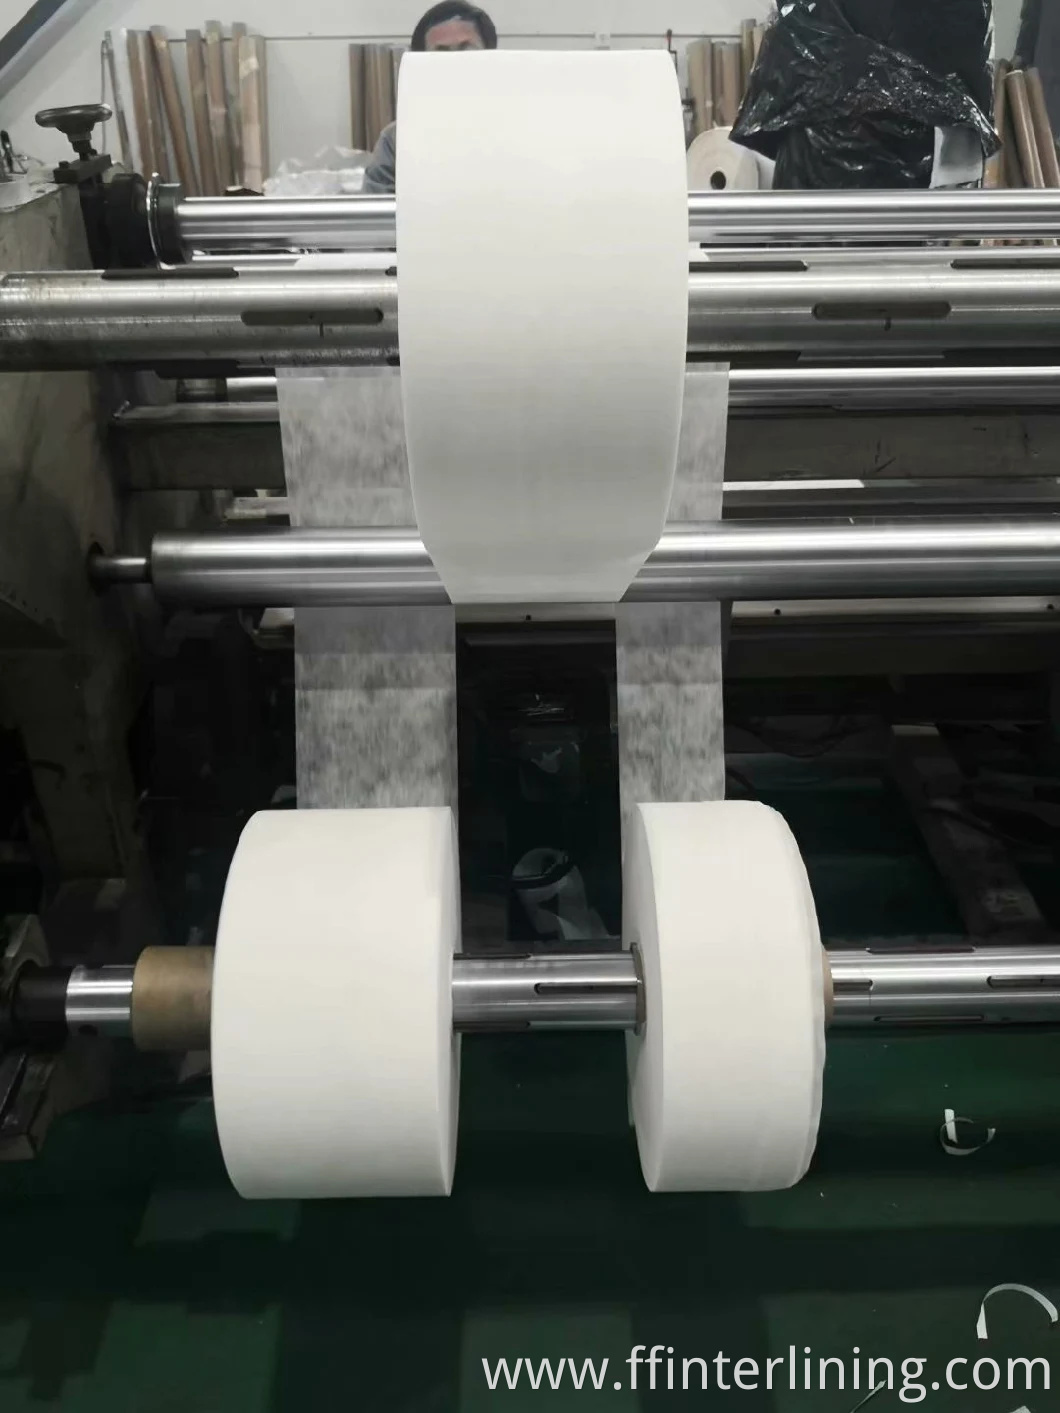 100% Polyester Material Air Filter Non-Woven Cloth